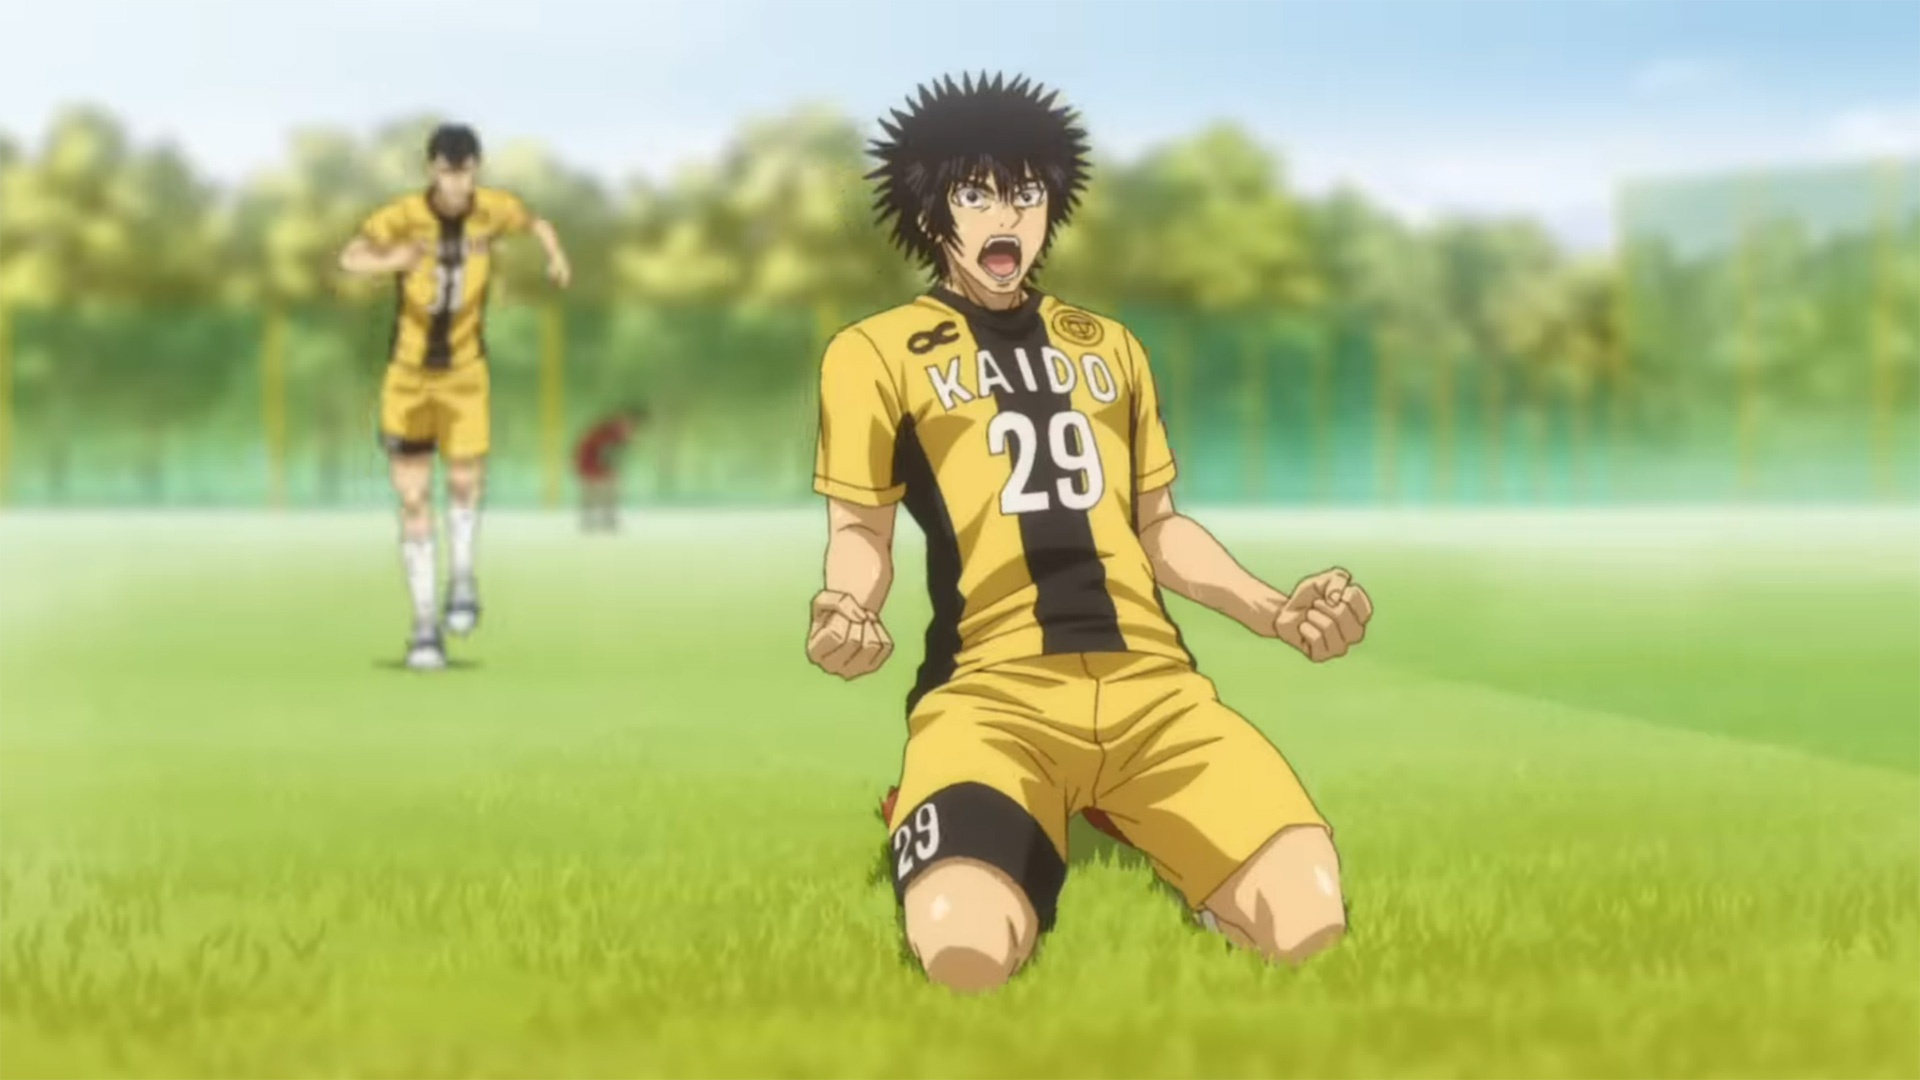 Teaser trailer da série anime de futebol Aoashi